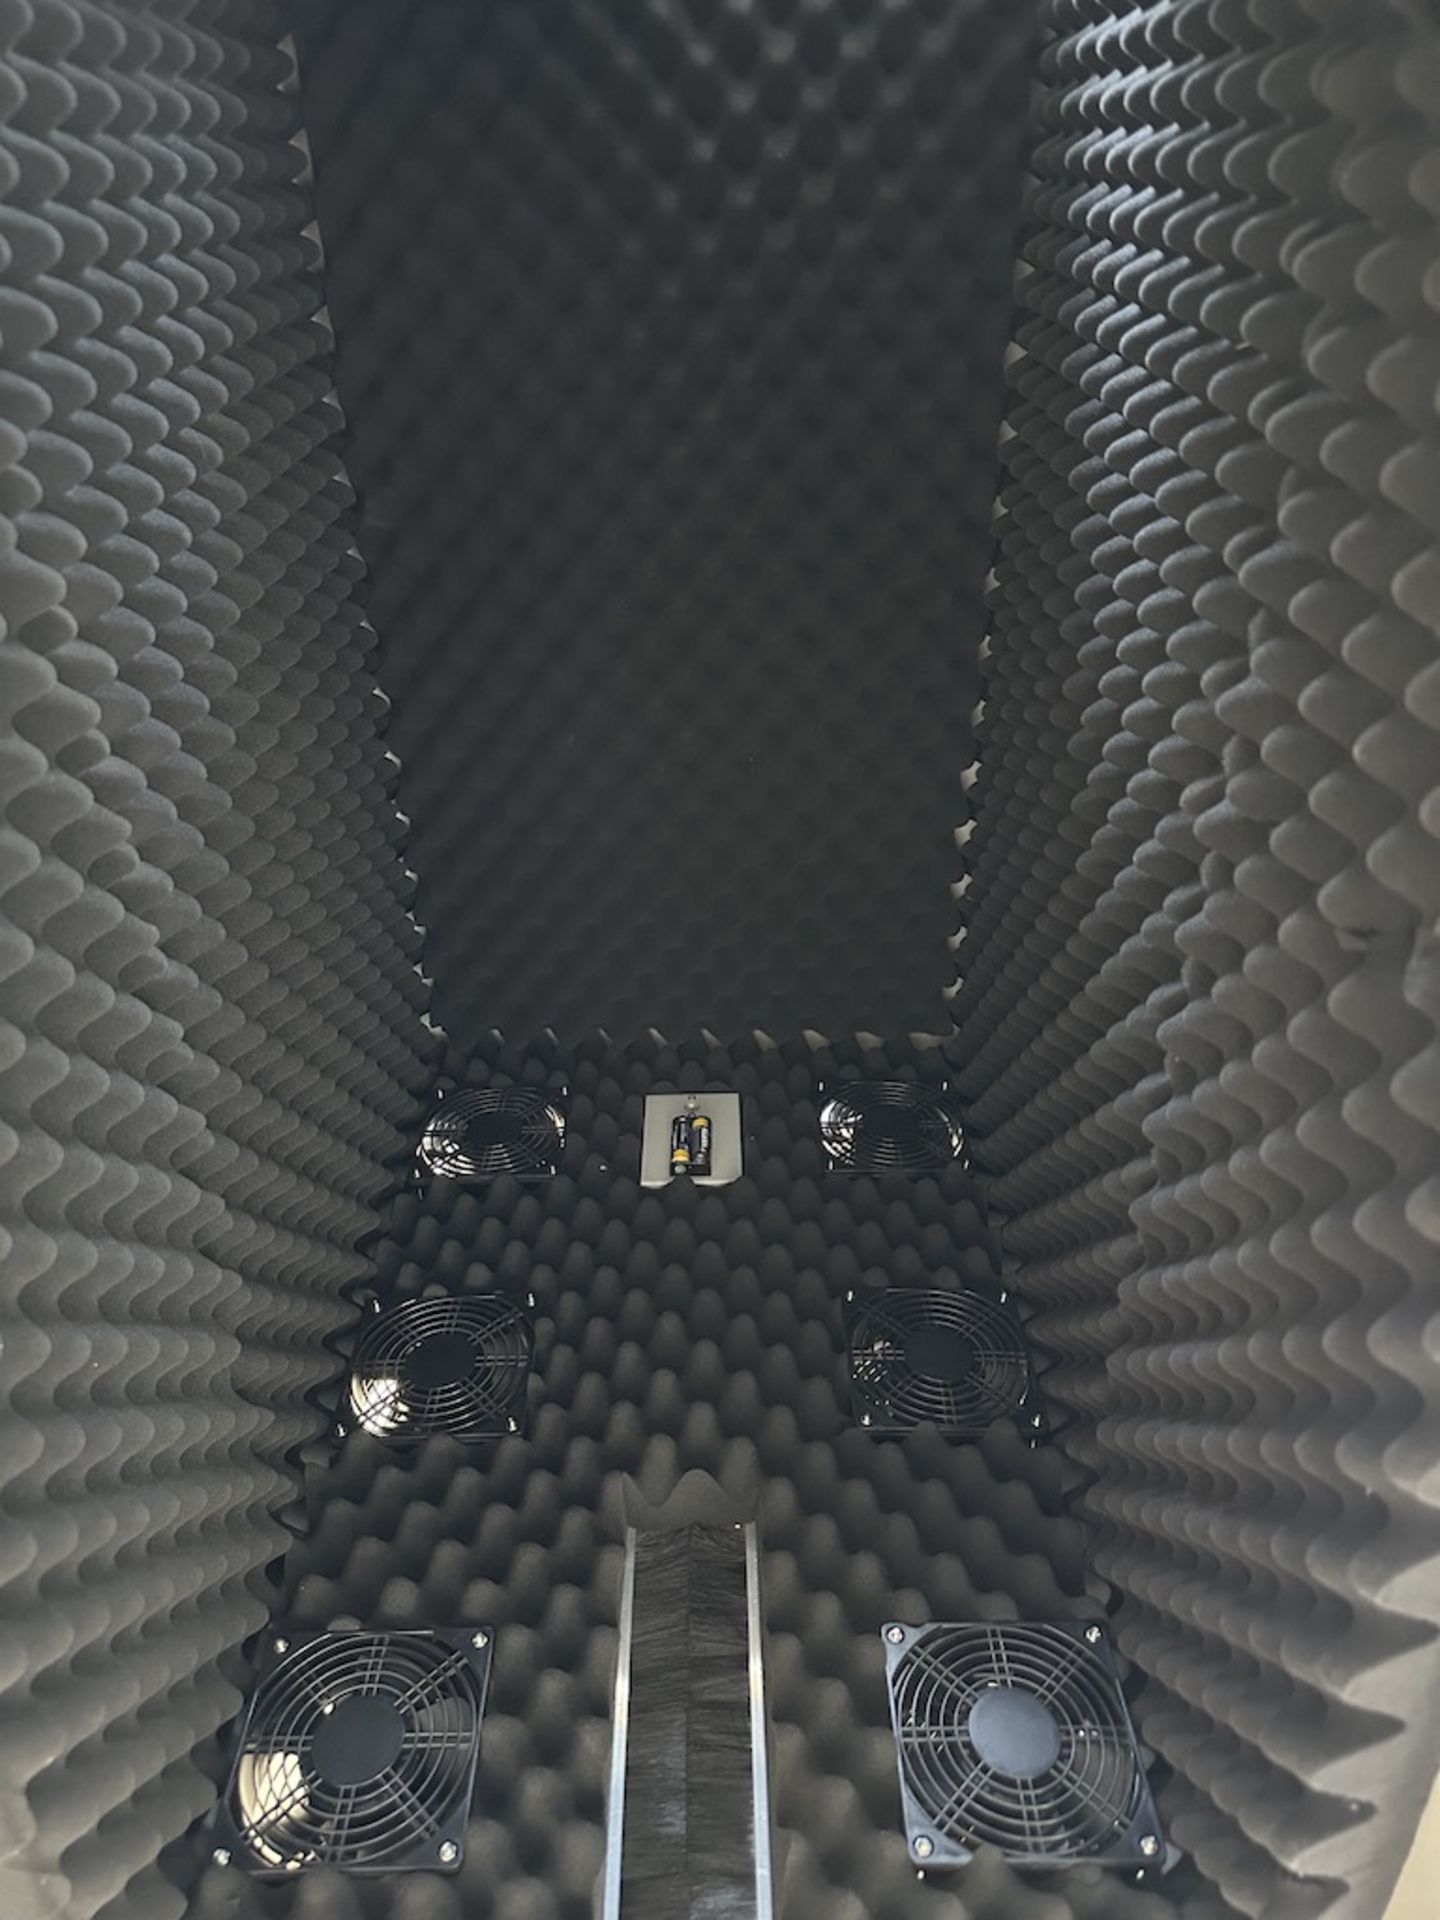 MS Noise - Noise Reduction Enclosure, model WAT-902, model DBL-ORB - Image 4 of 9